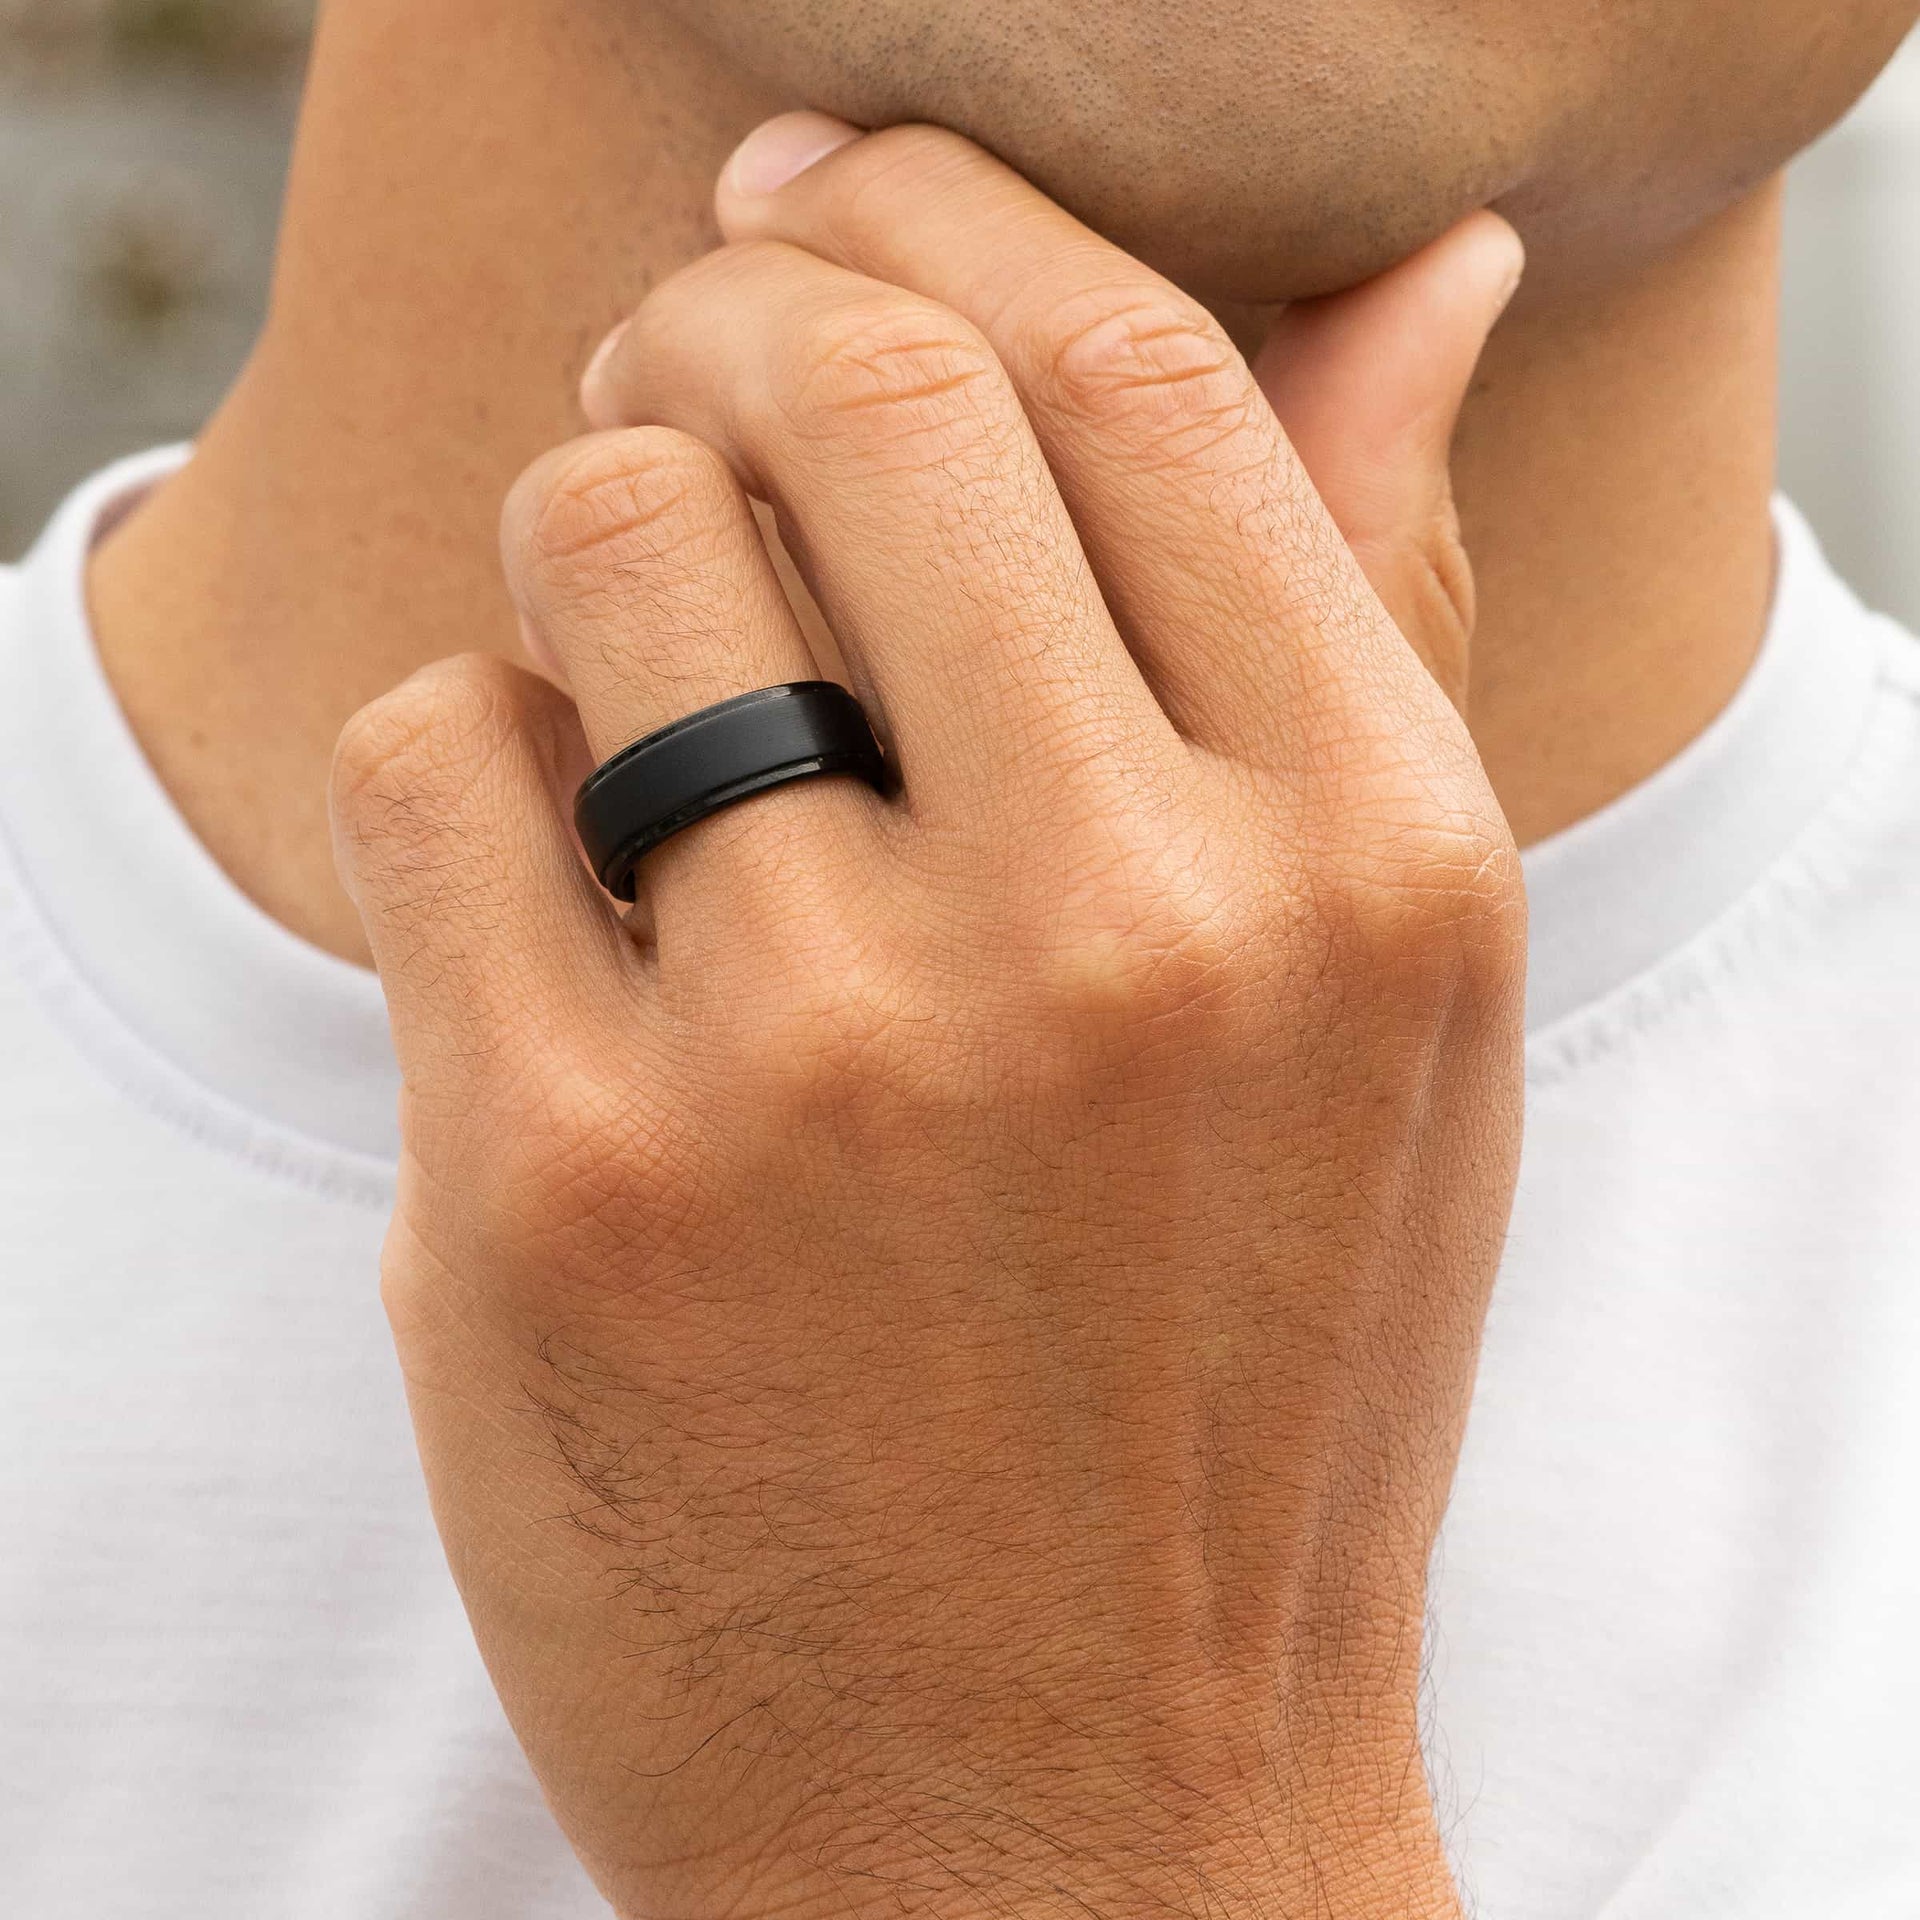 black affordable wedding ring called excalibur